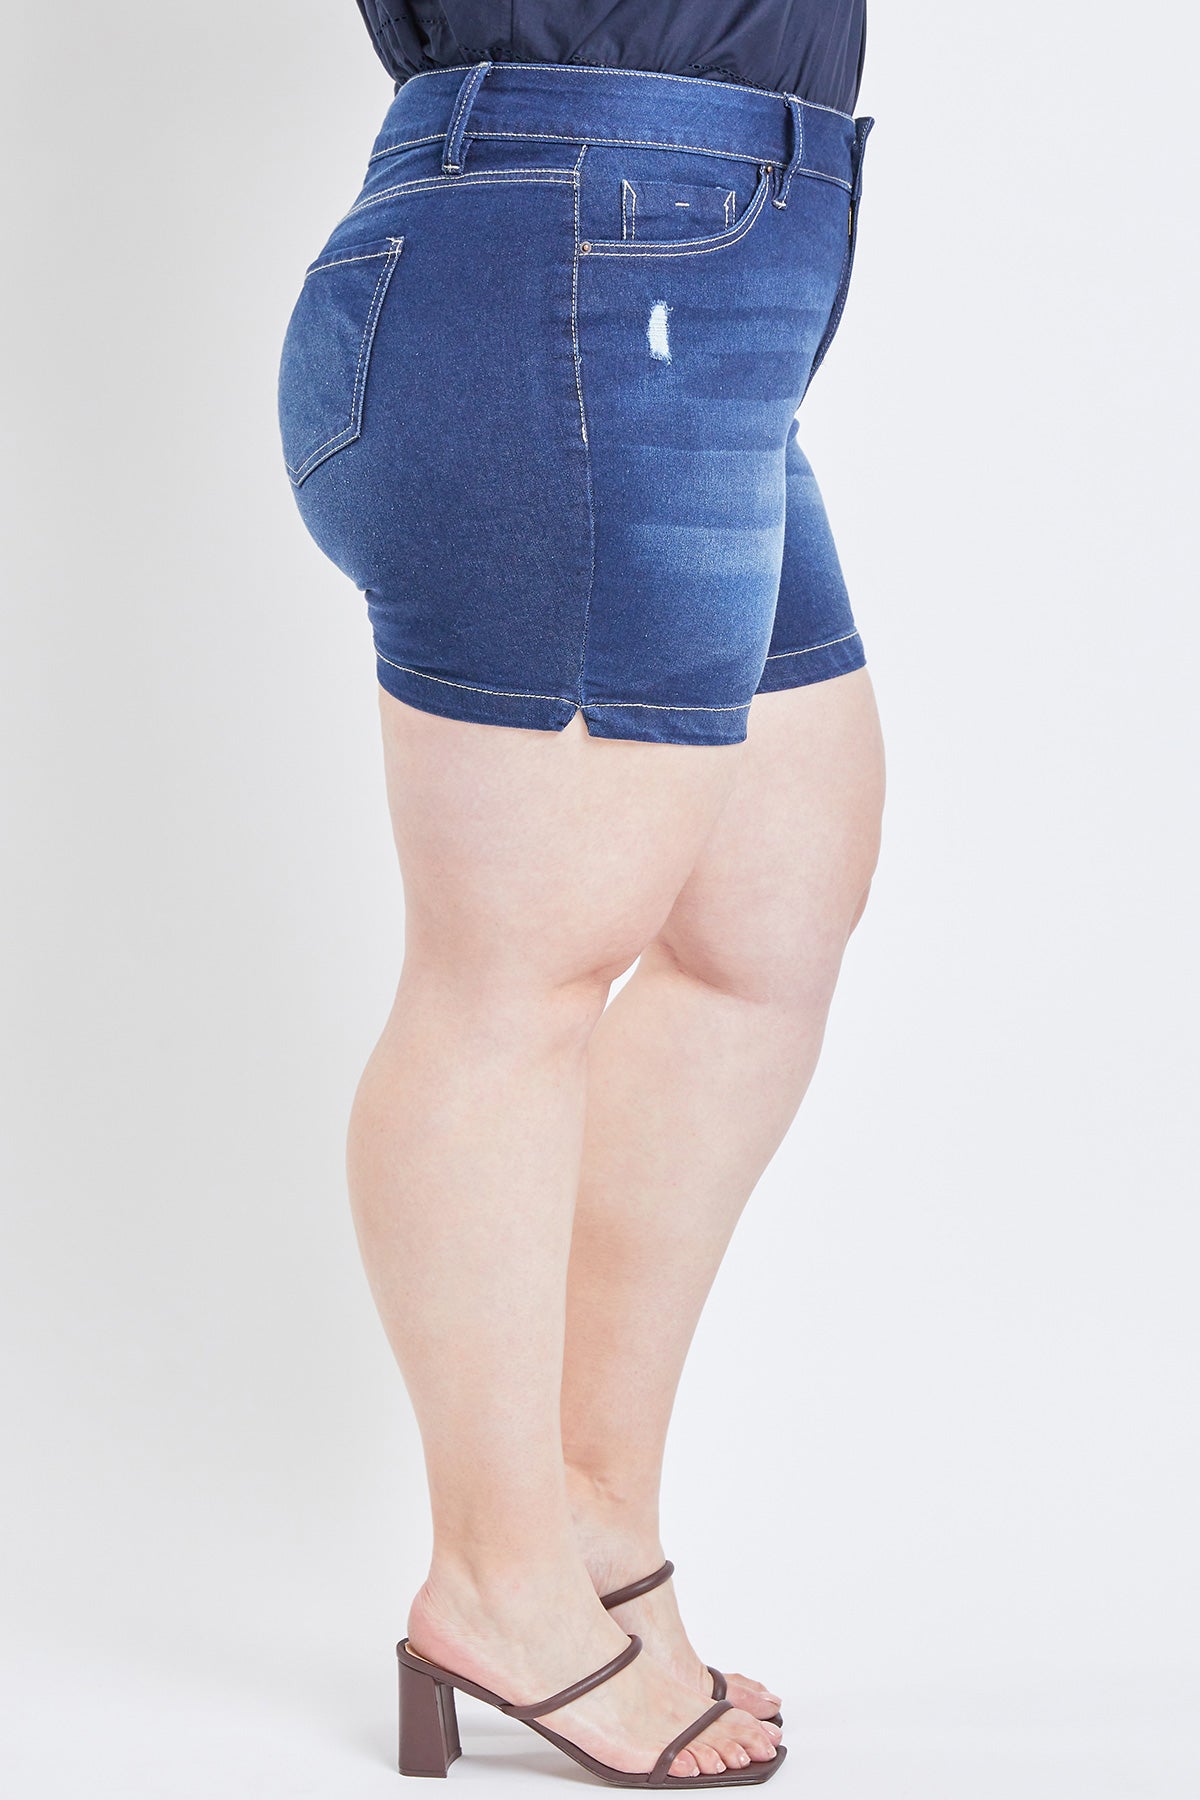 Missy Plus Size Basic 2-Button Side Slit Hem Shorts 12 Pack